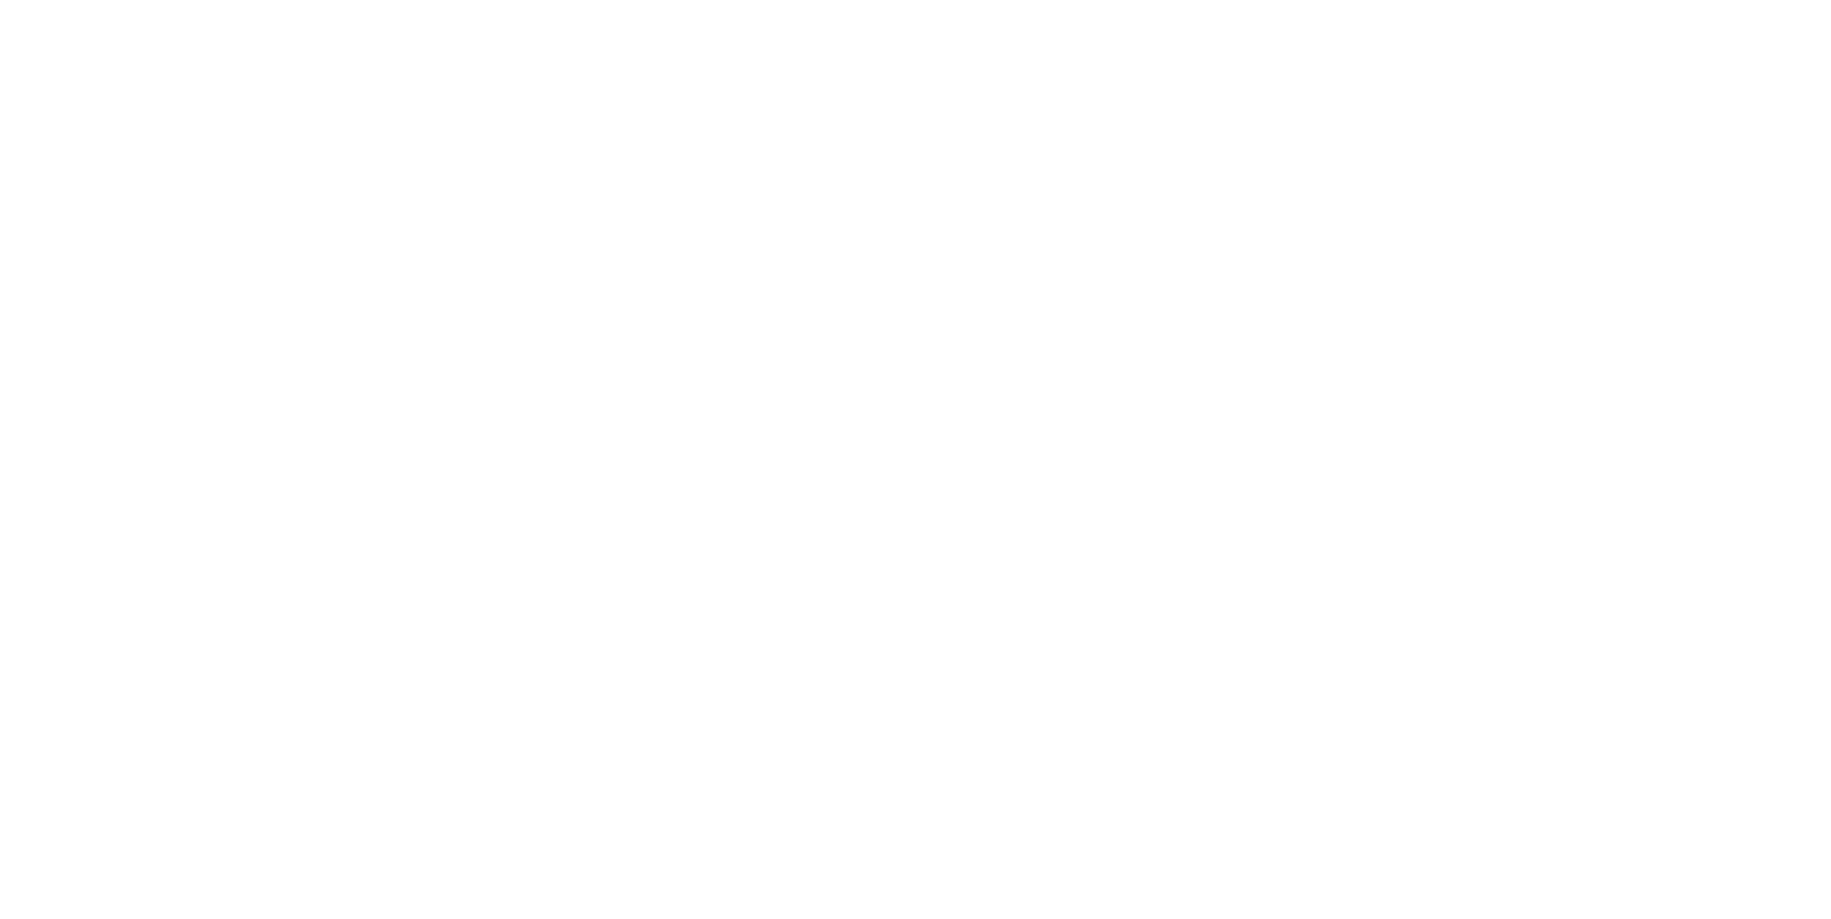 Logo NBS